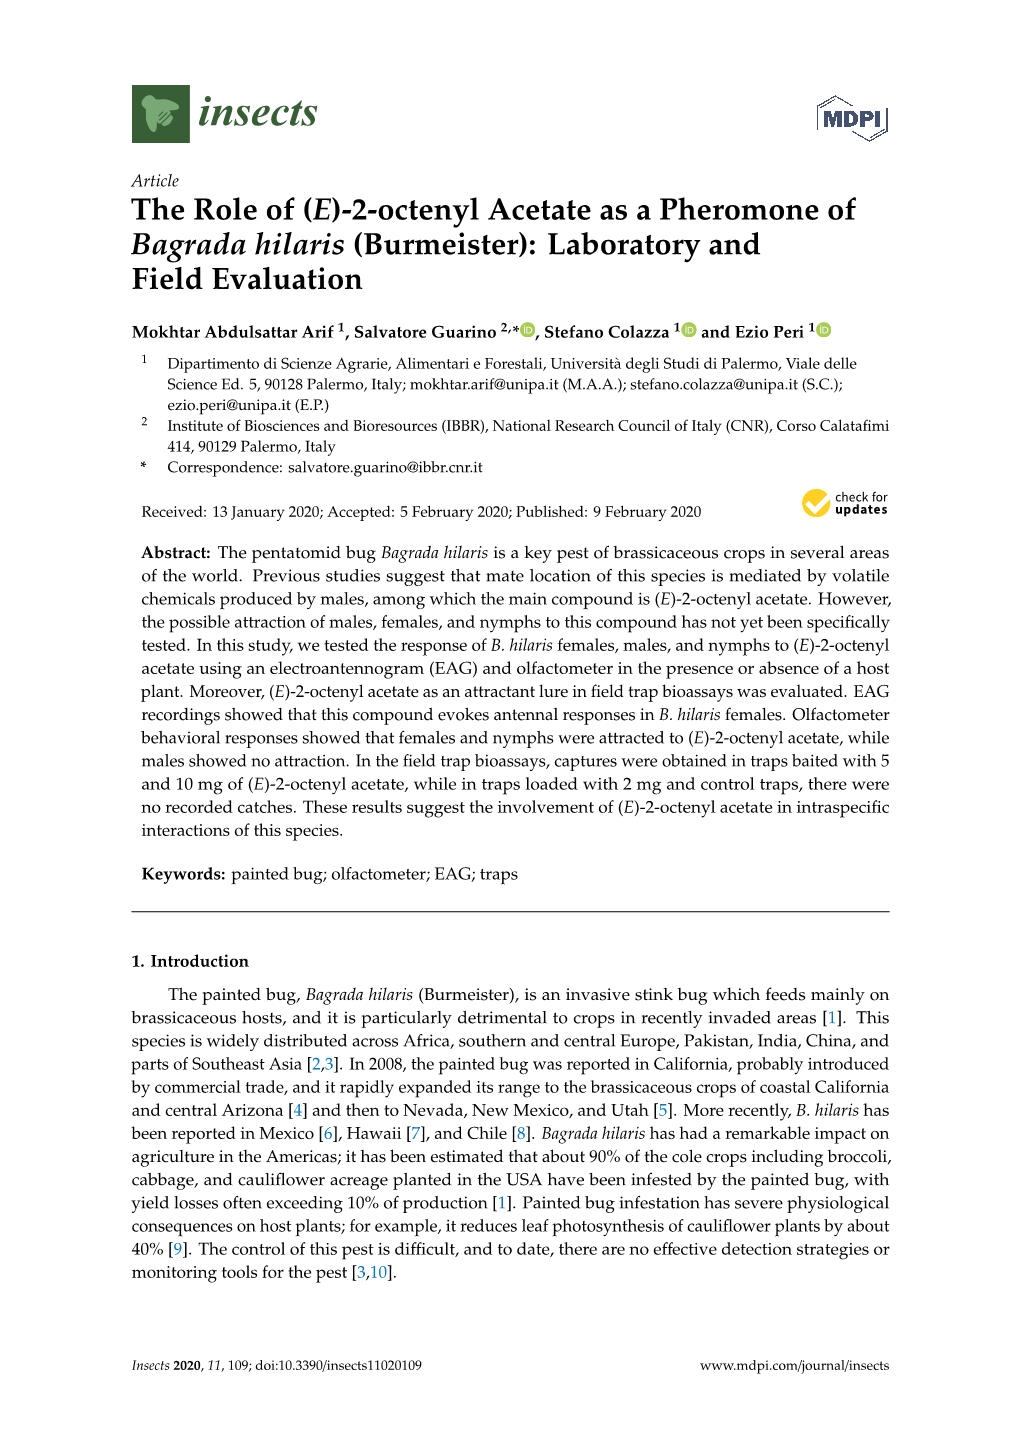 (E)-2-Octenyl Acetate As a Pheromone of Bagrada Hilaris (Burmeister): Laboratory and Field Evaluation